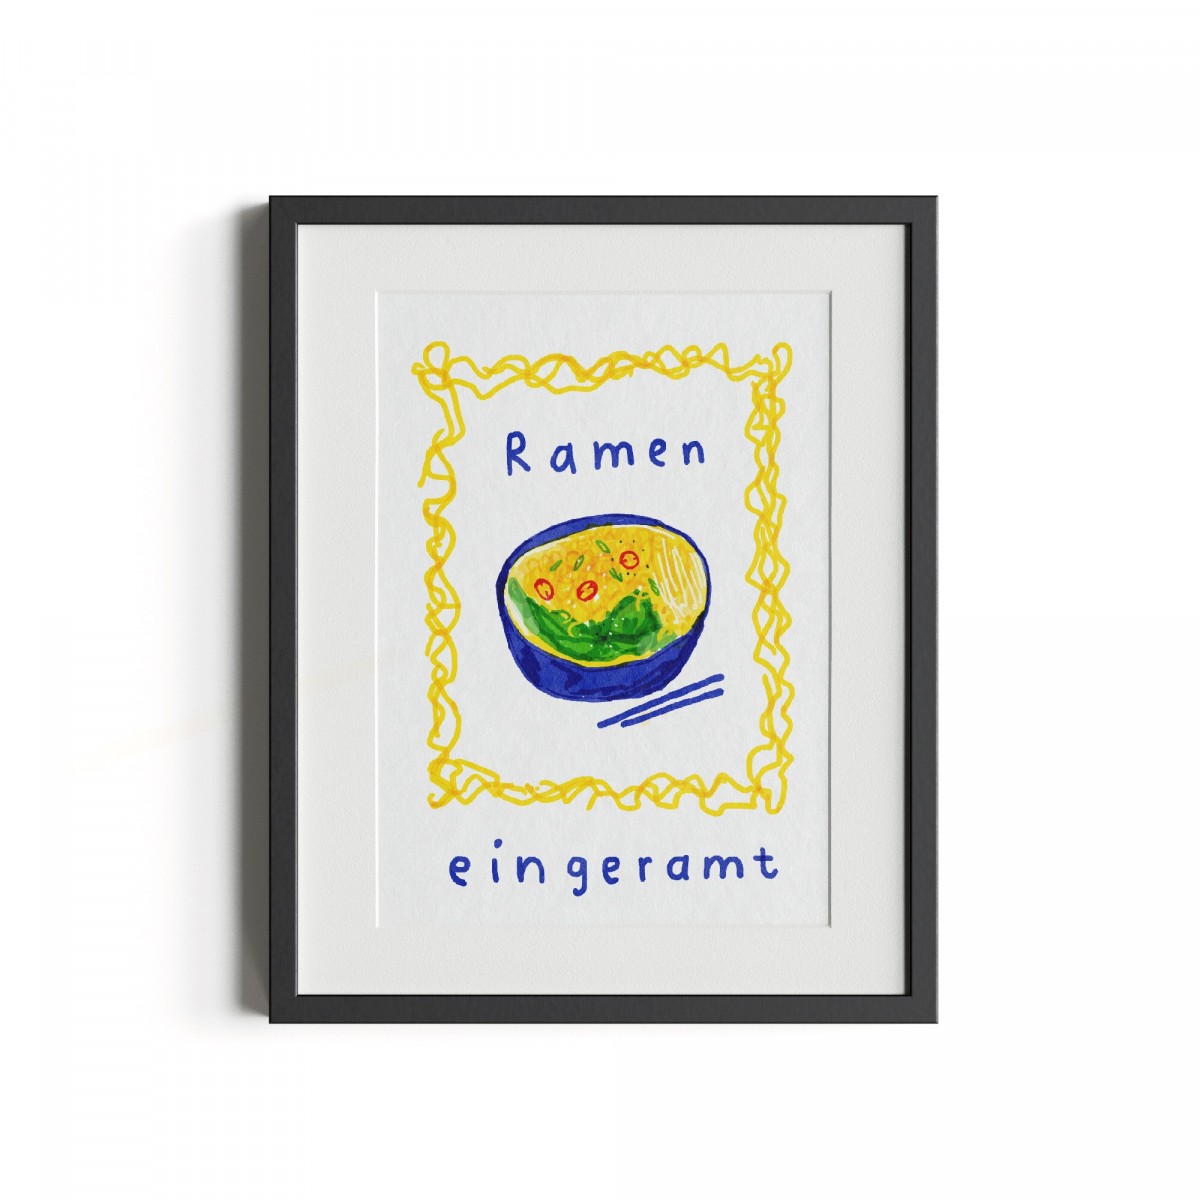 RAMEN EINGERAMT - A4 Print - finallyfoundagoodusername